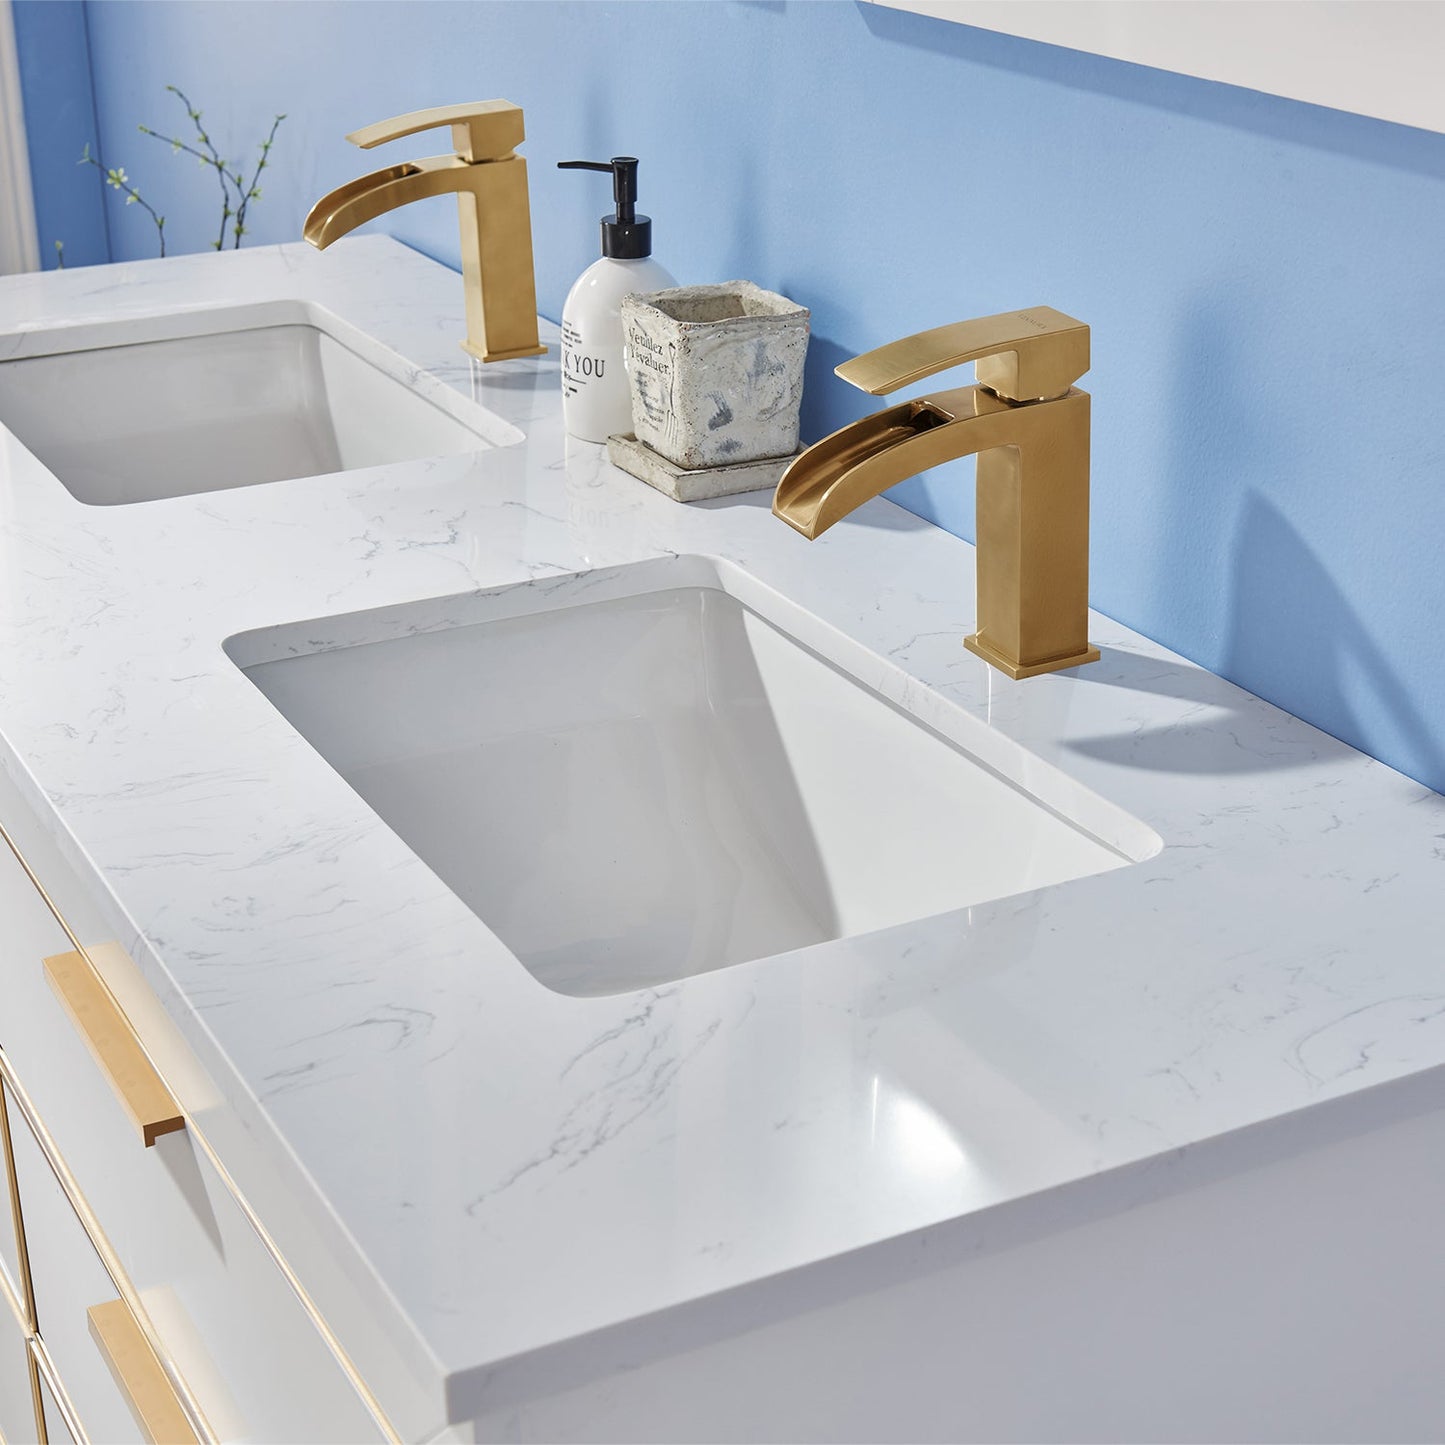 Jackson 60" Double Bathroom Vanity Set in White and Aosta White Composite Stone Countertop with Mirror